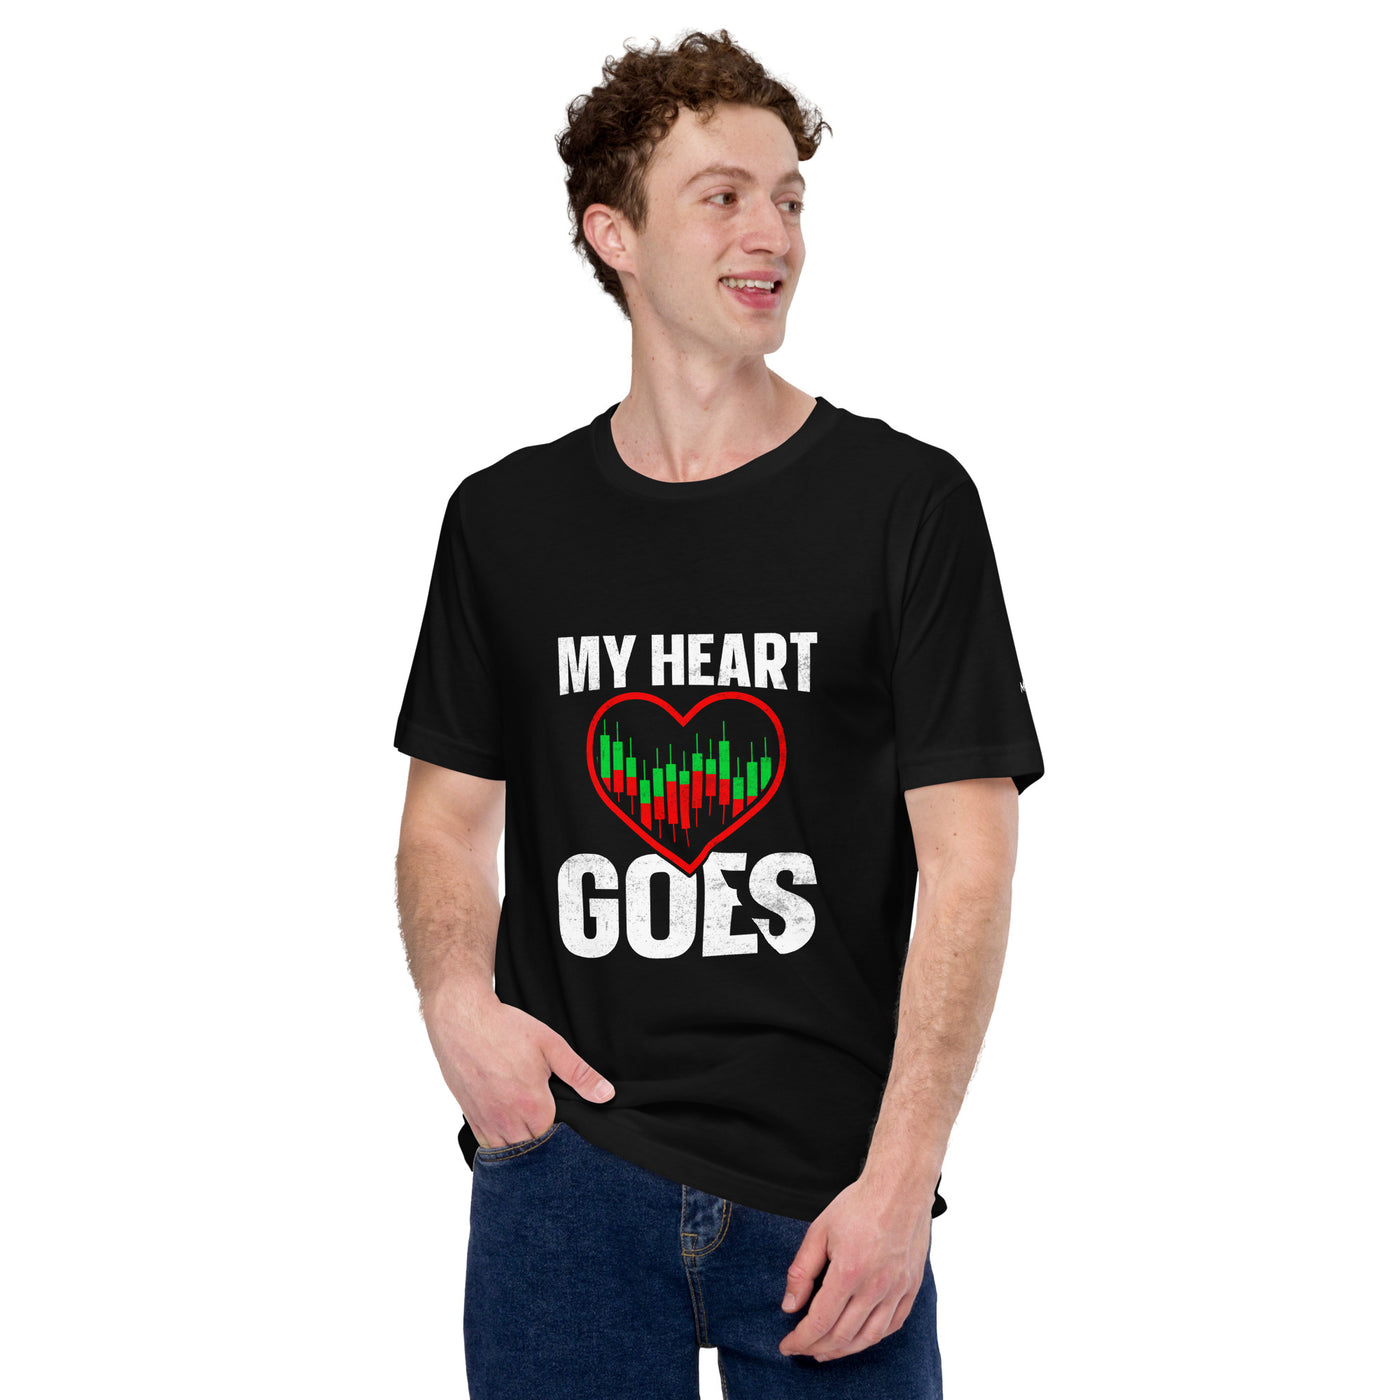 My Heart Goes - Unisex t-shirt